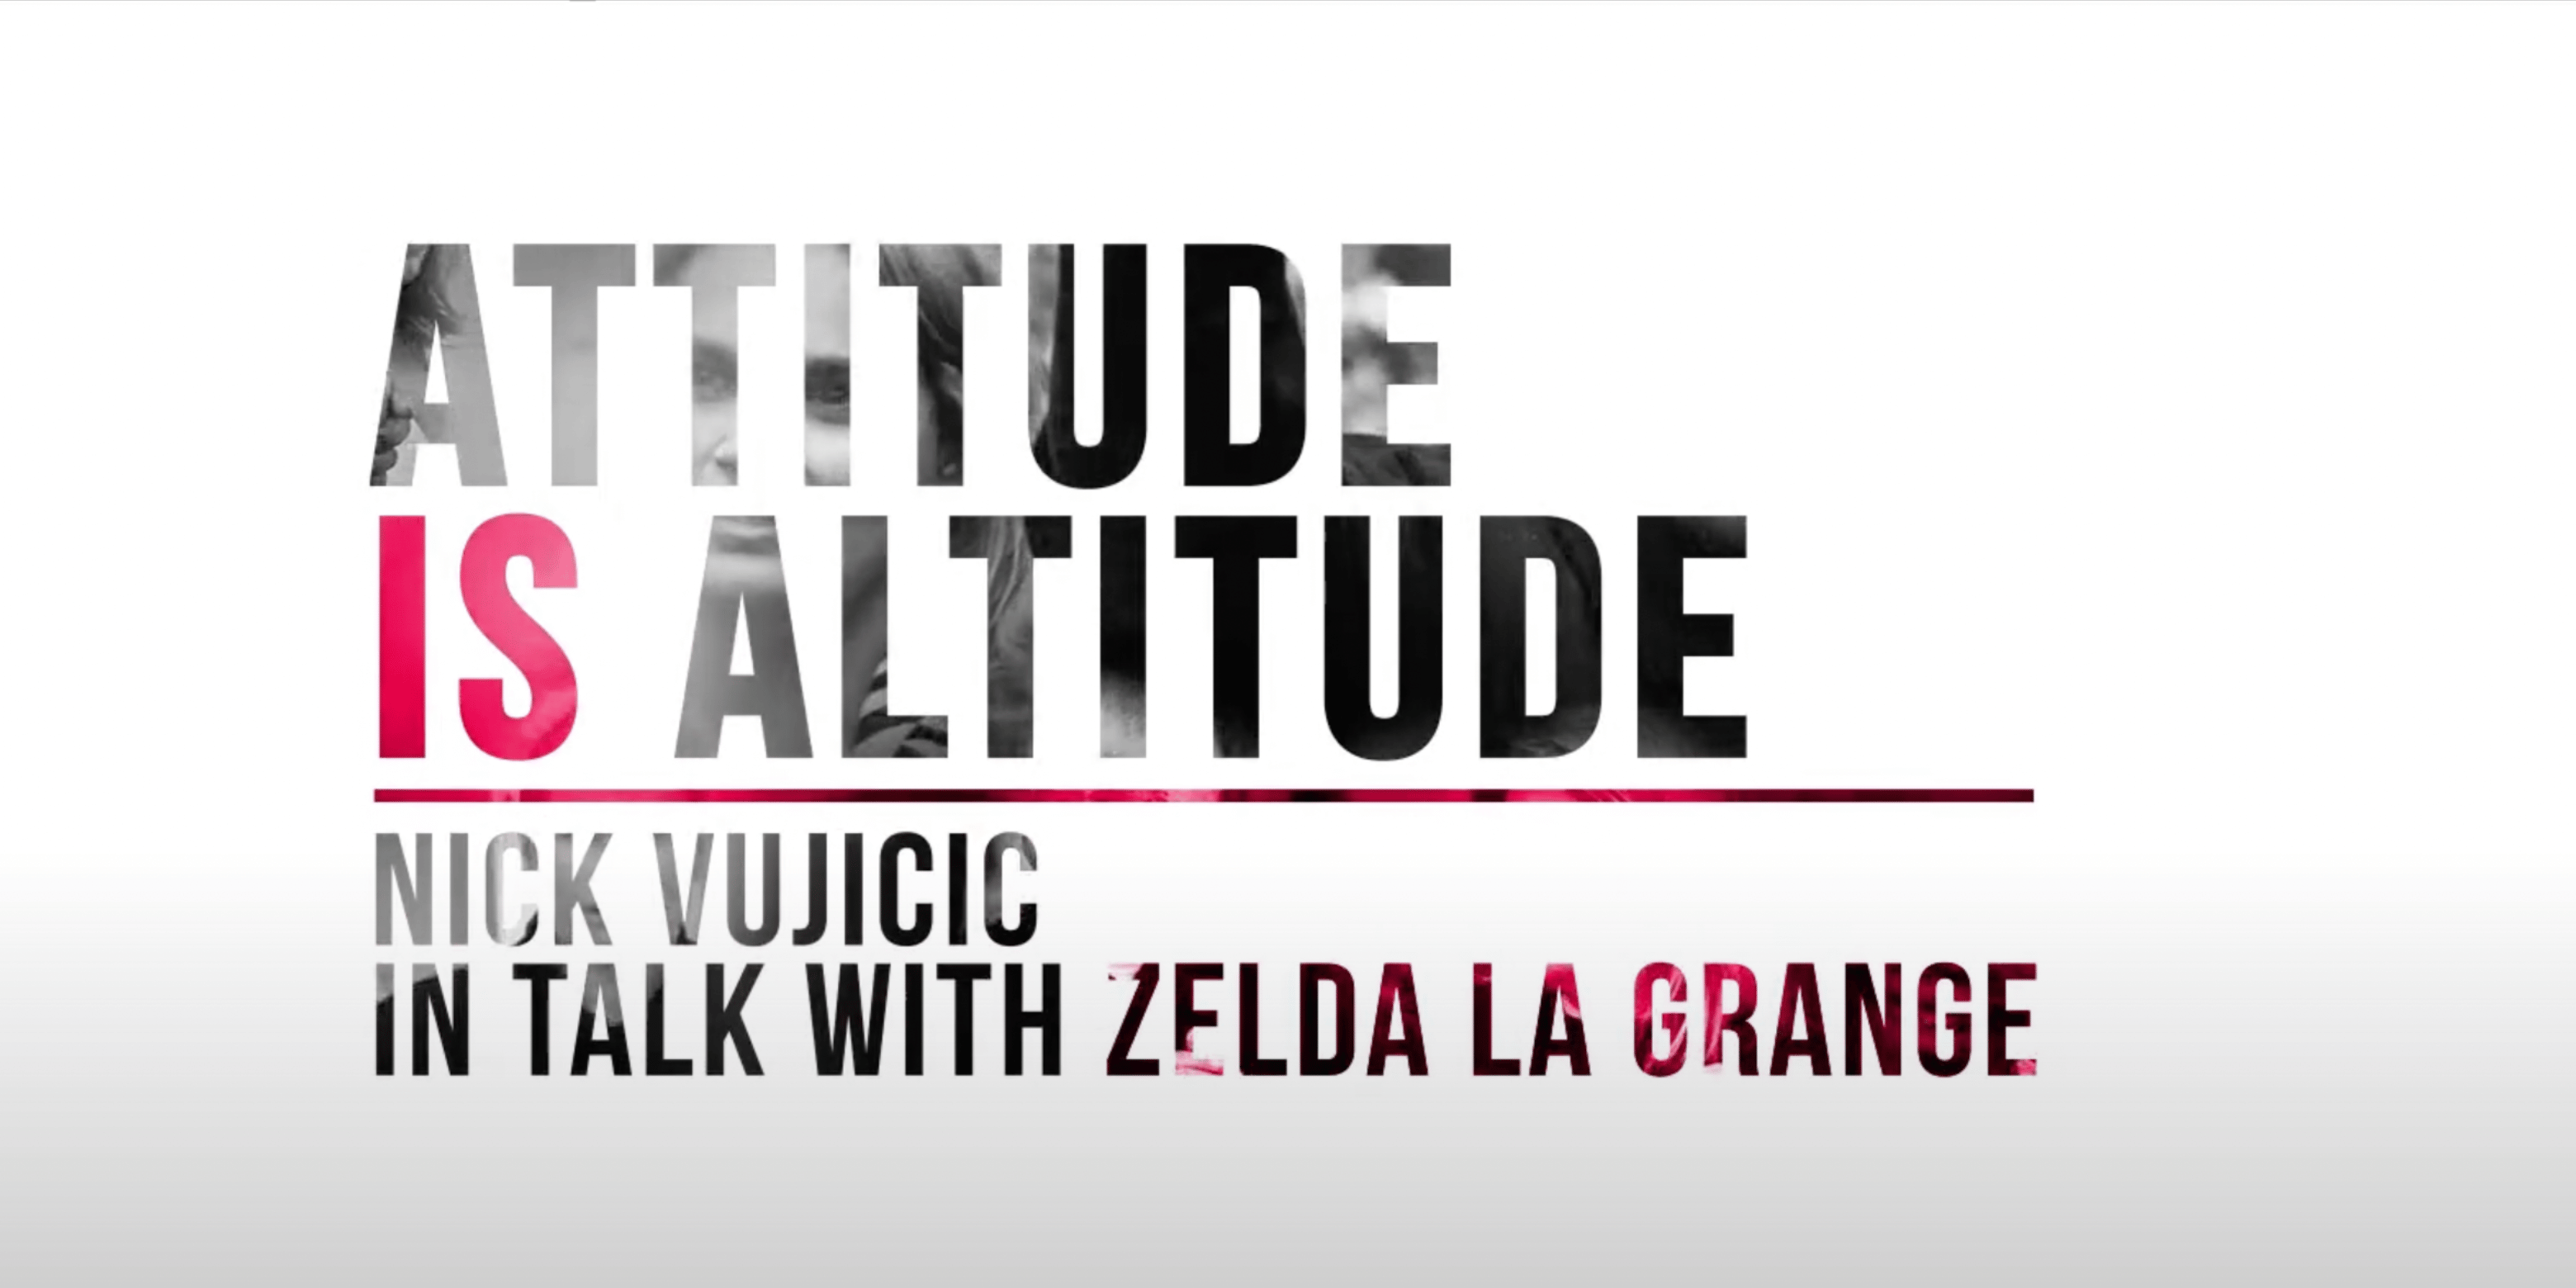 In Talk With Zelda La Grange